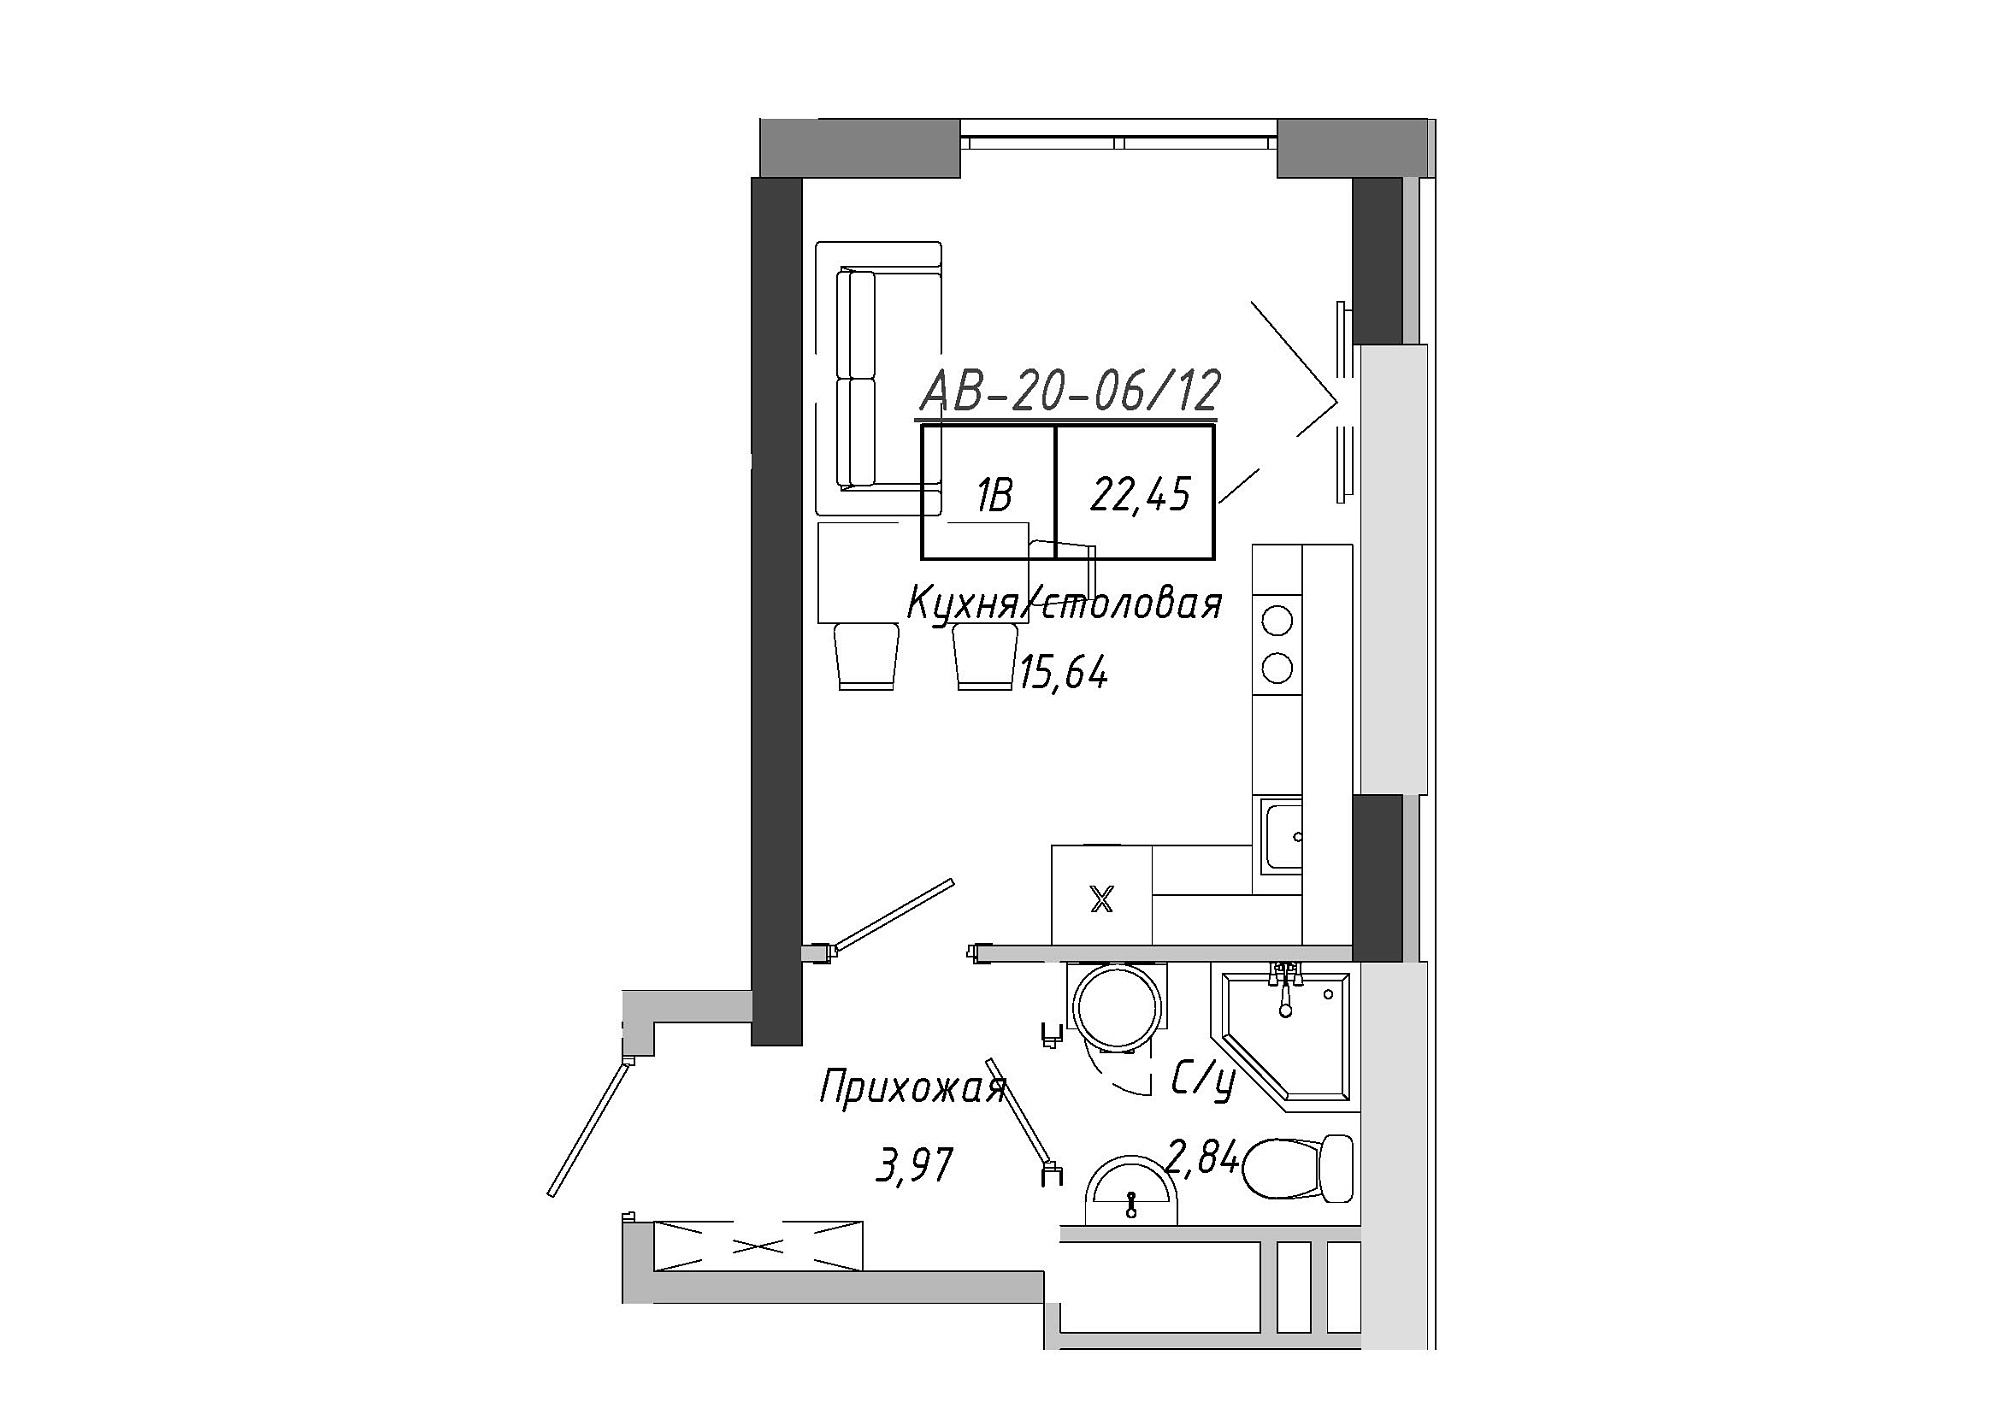 Planning Smart flats area 21.87m2, AB-20-06/00012.